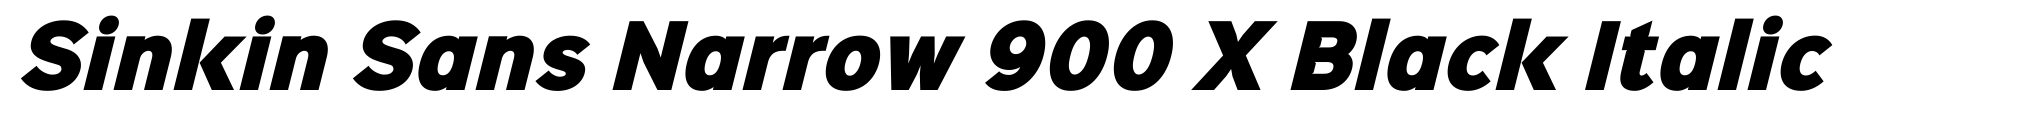 Sinkin Sans Narrow 900 X Black Italic image